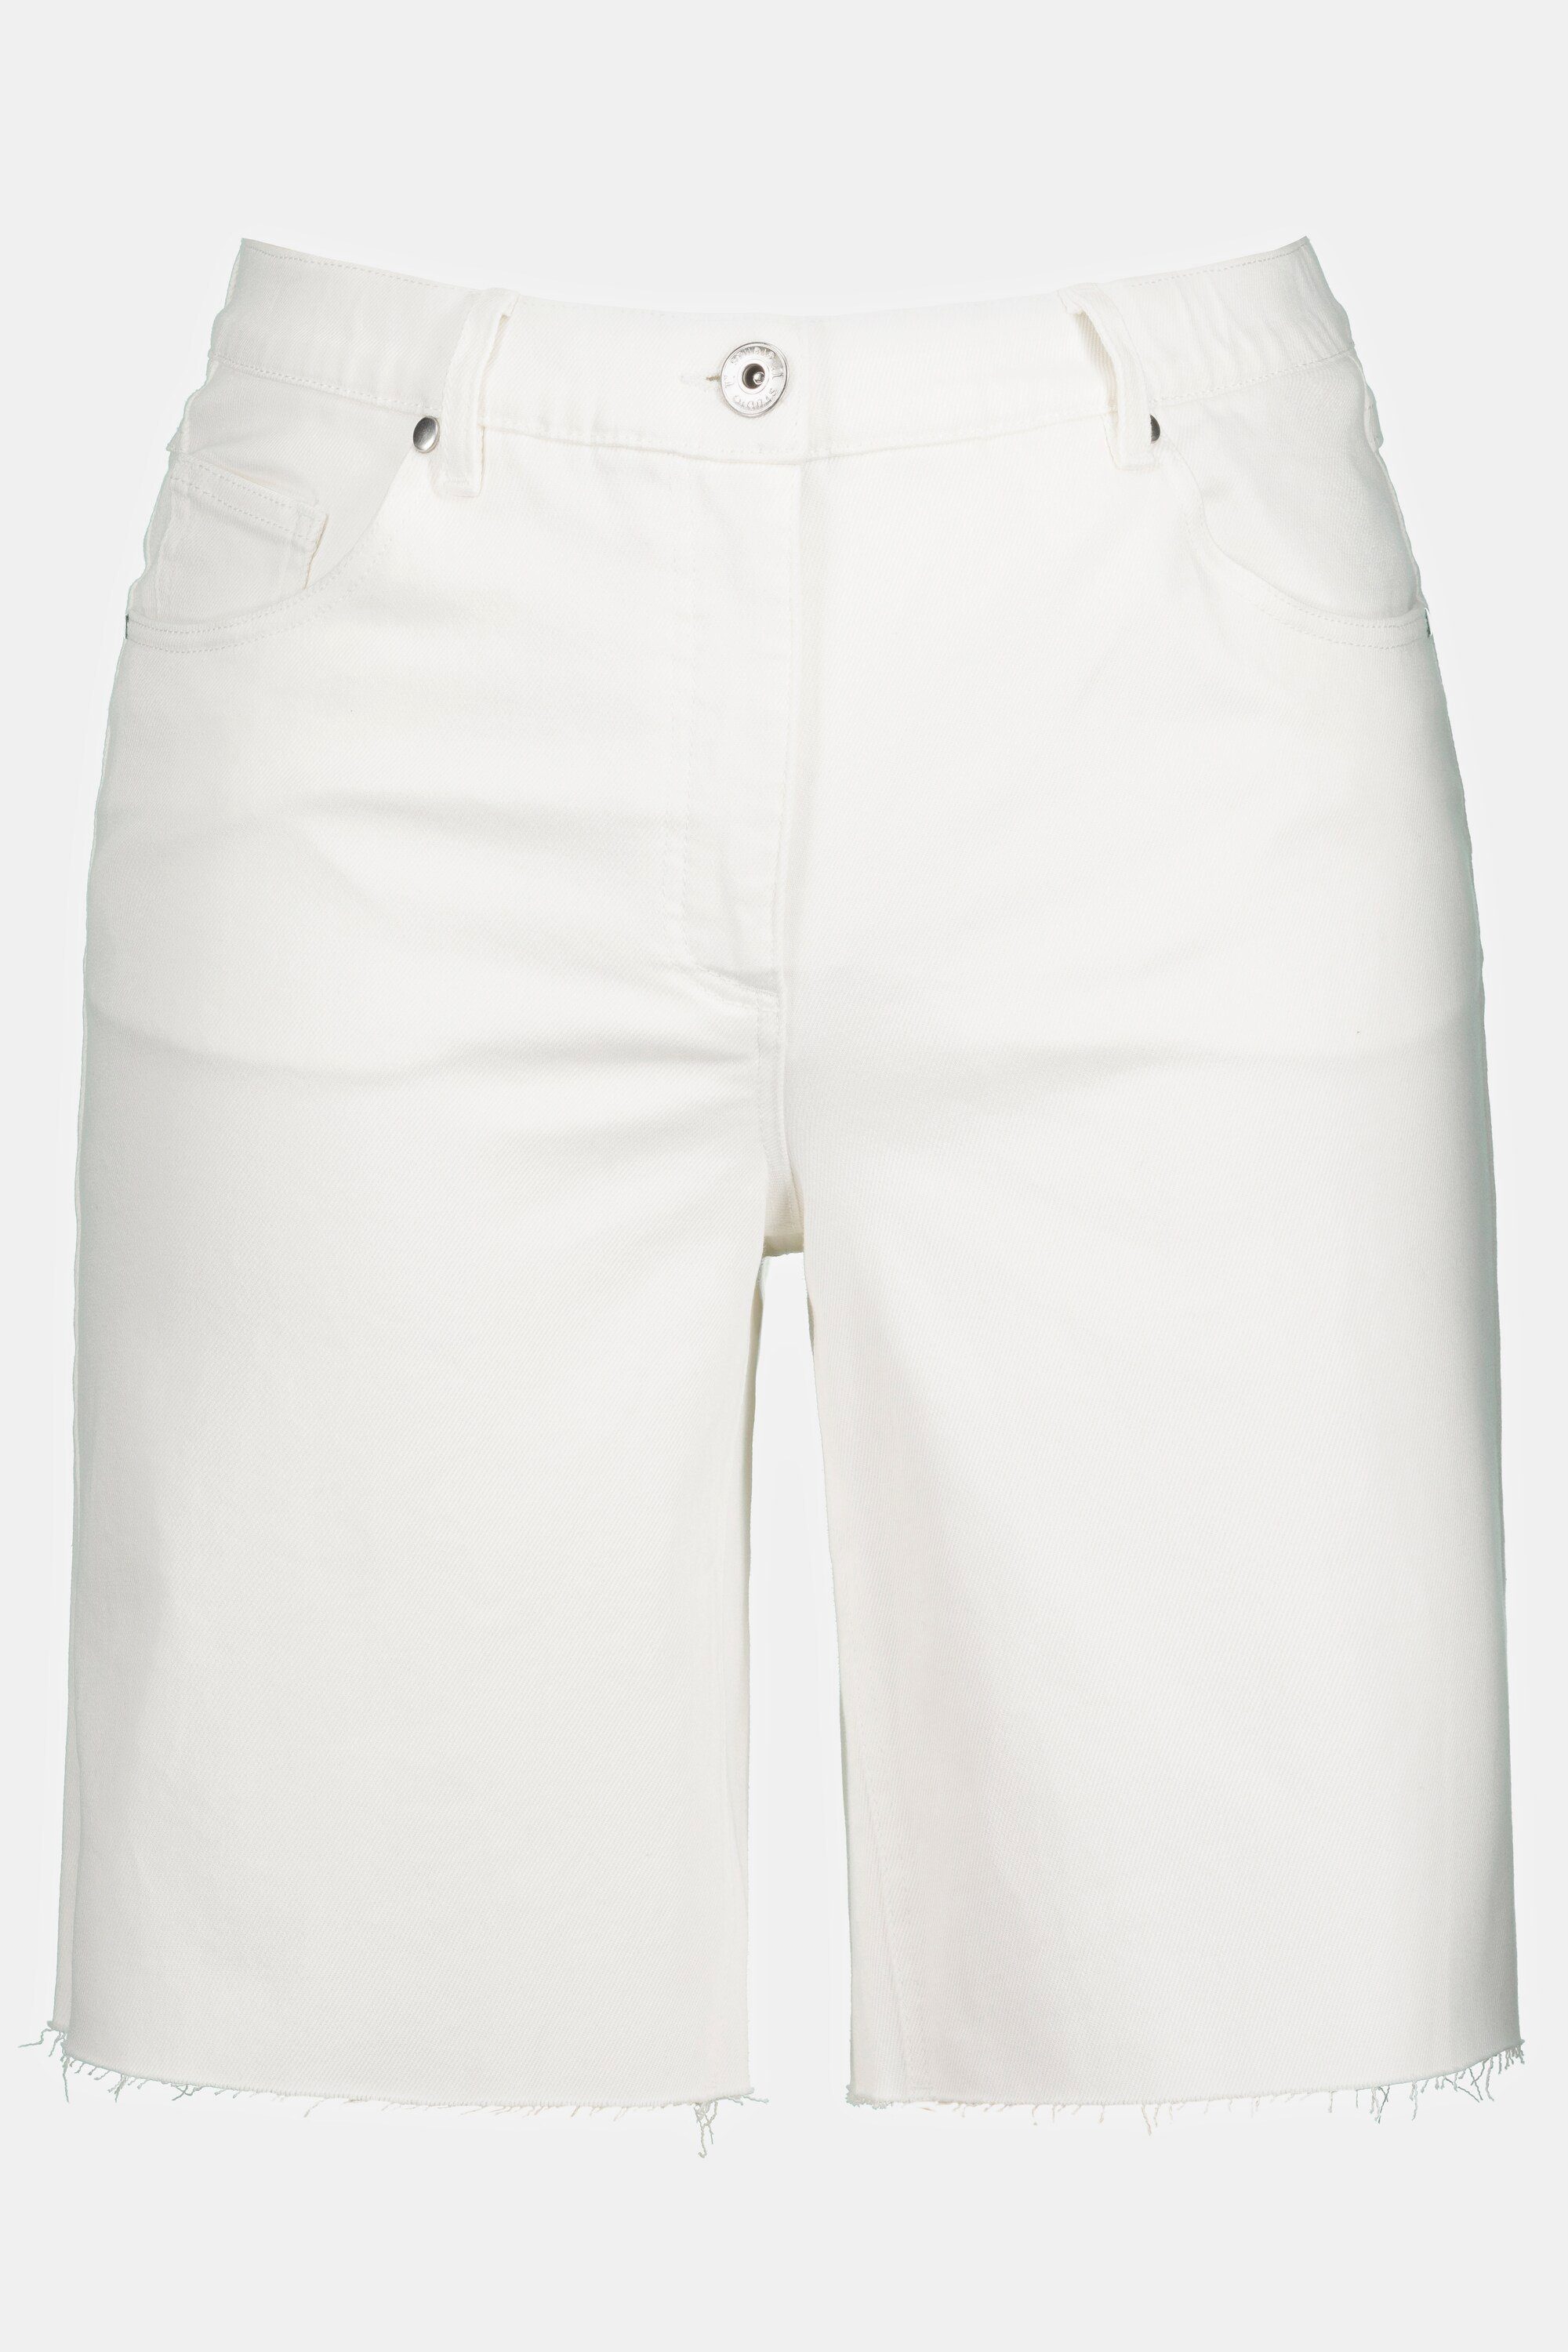 5-Pocket Waist Untold offwhite Jeansshorts Studio Jeans-Shorts High